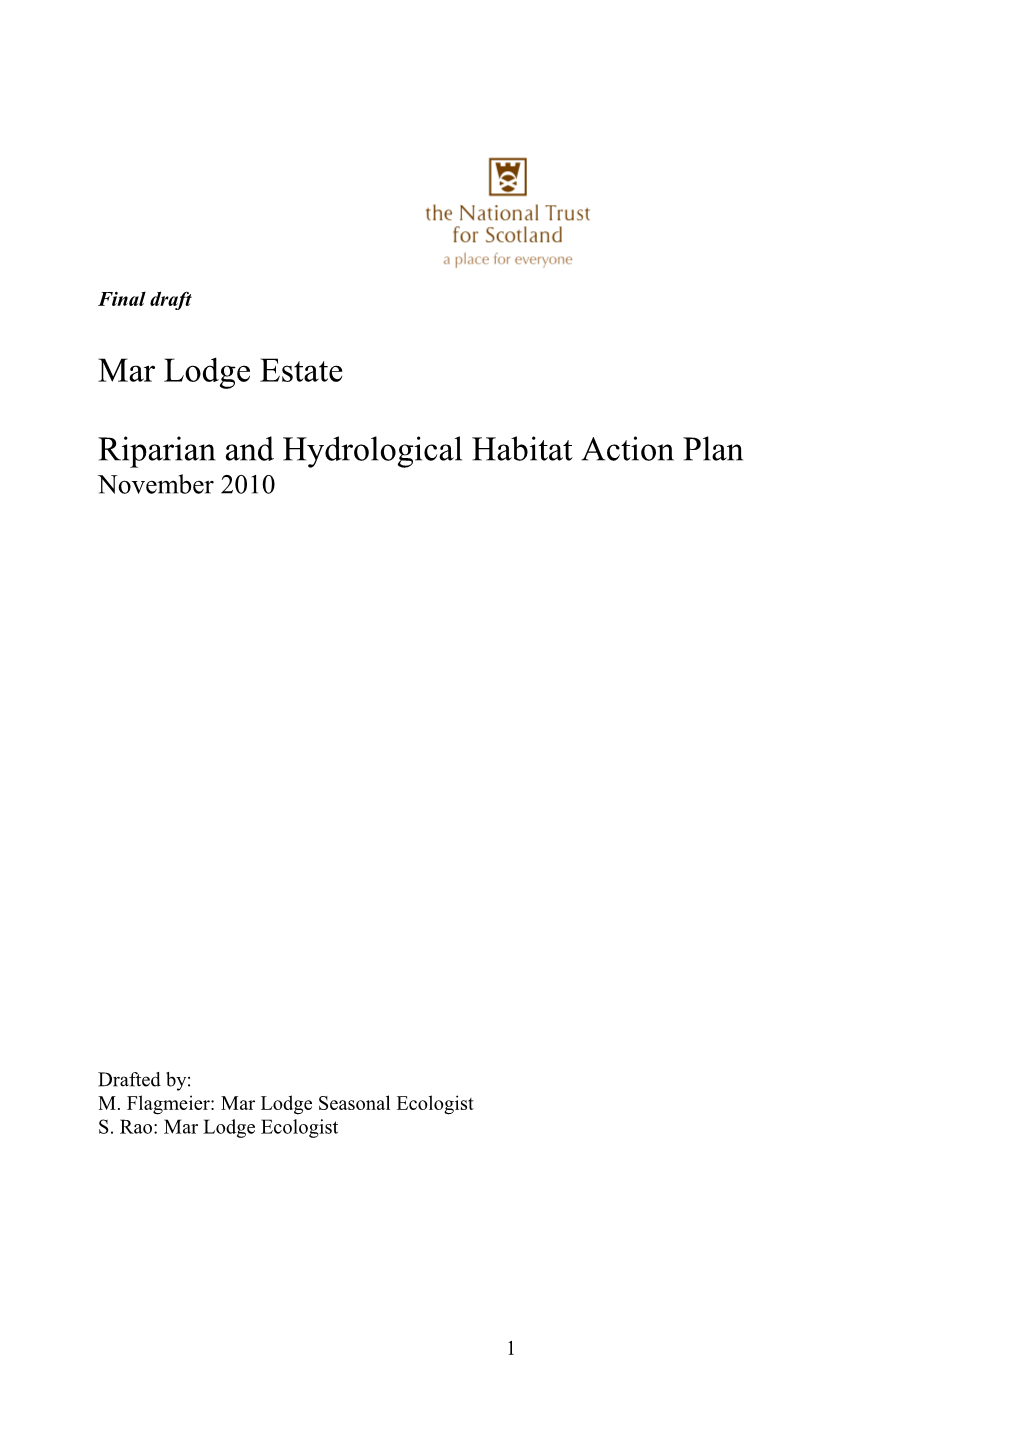 Introduction: Mar Lodge Estate Management Plan 2006-2011